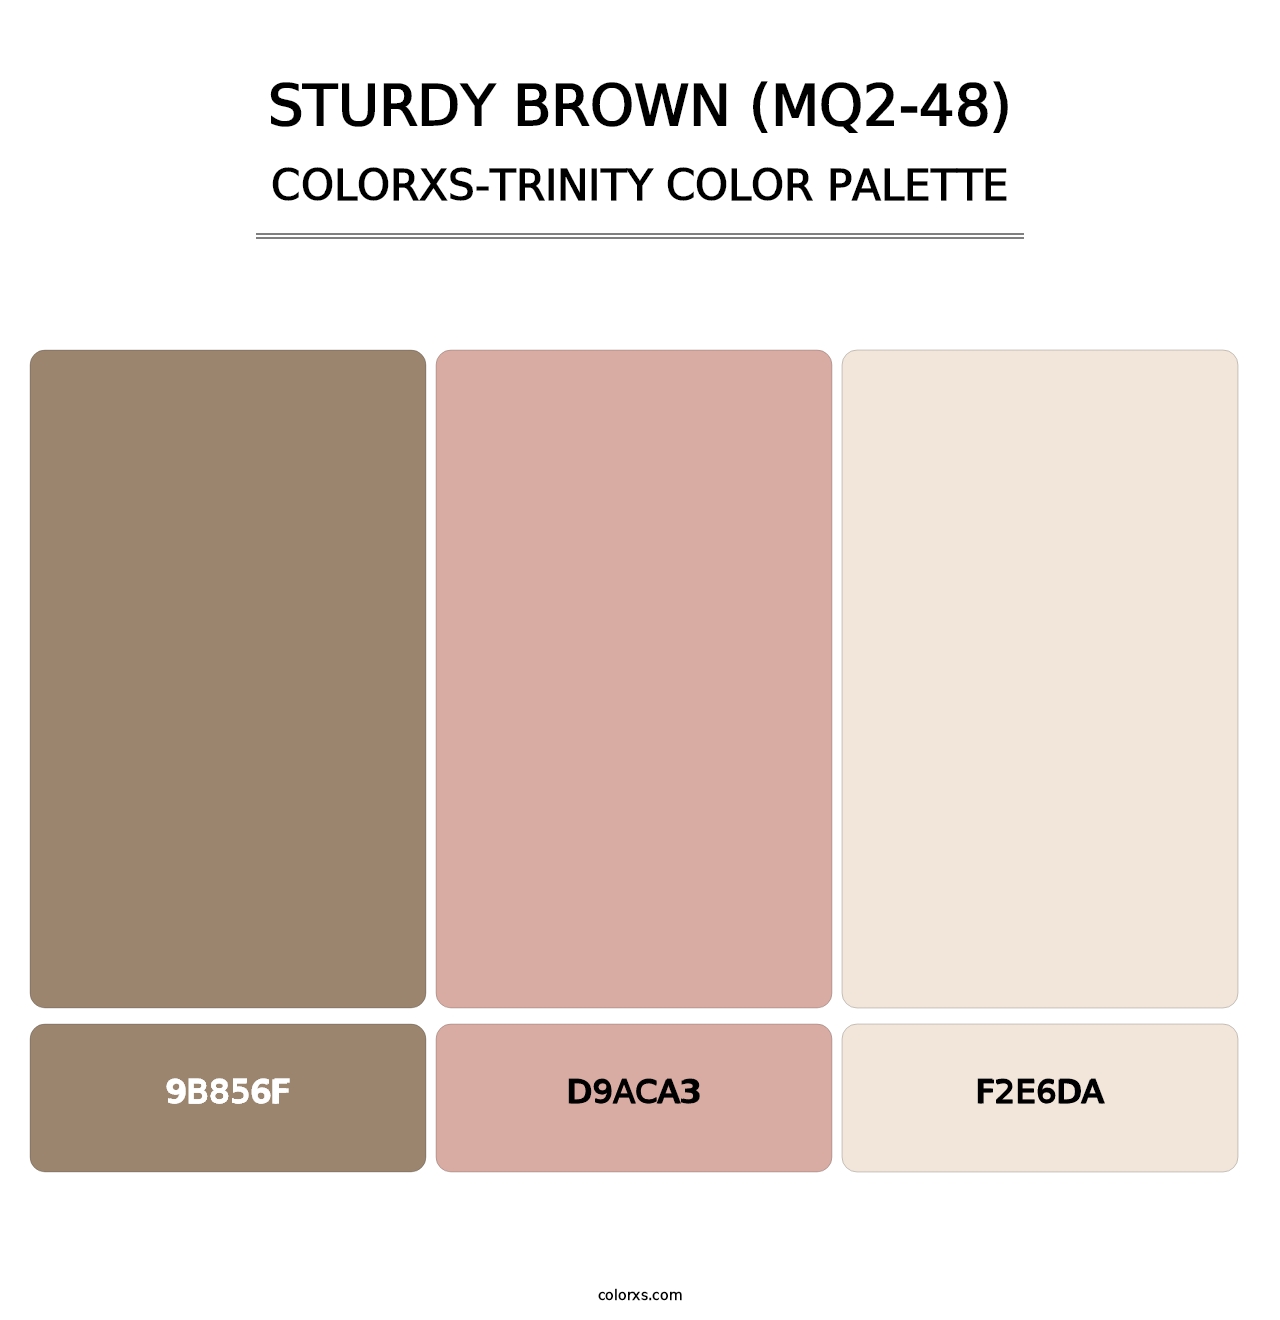 Sturdy Brown (MQ2-48) - Colorxs Trinity Palette